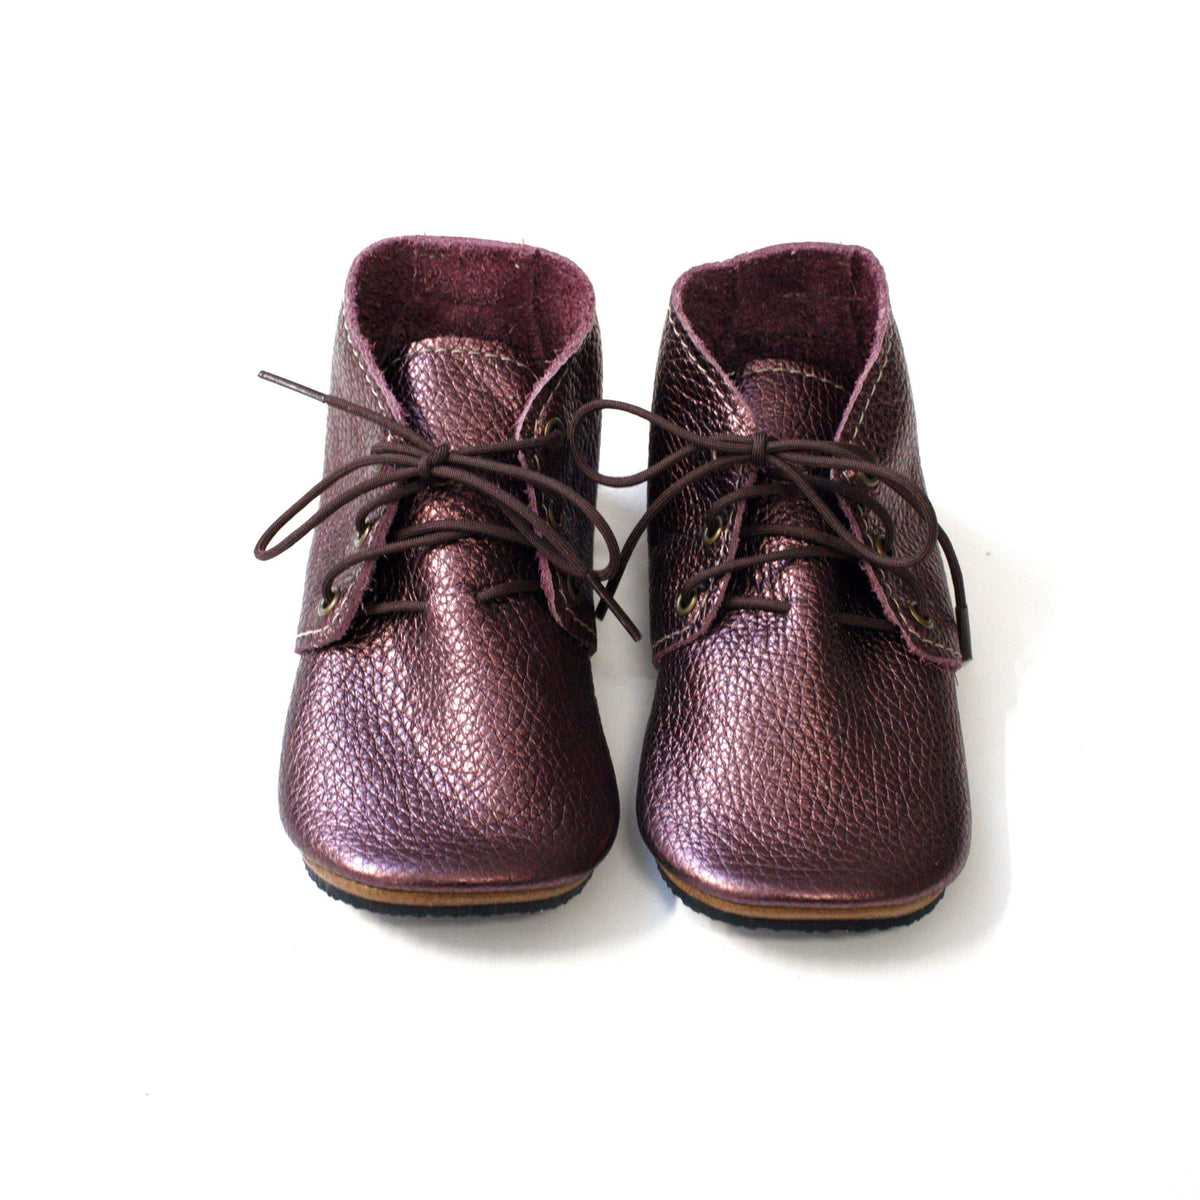 Duchess and Fox Plum Oxfords handmade barefoot shoes